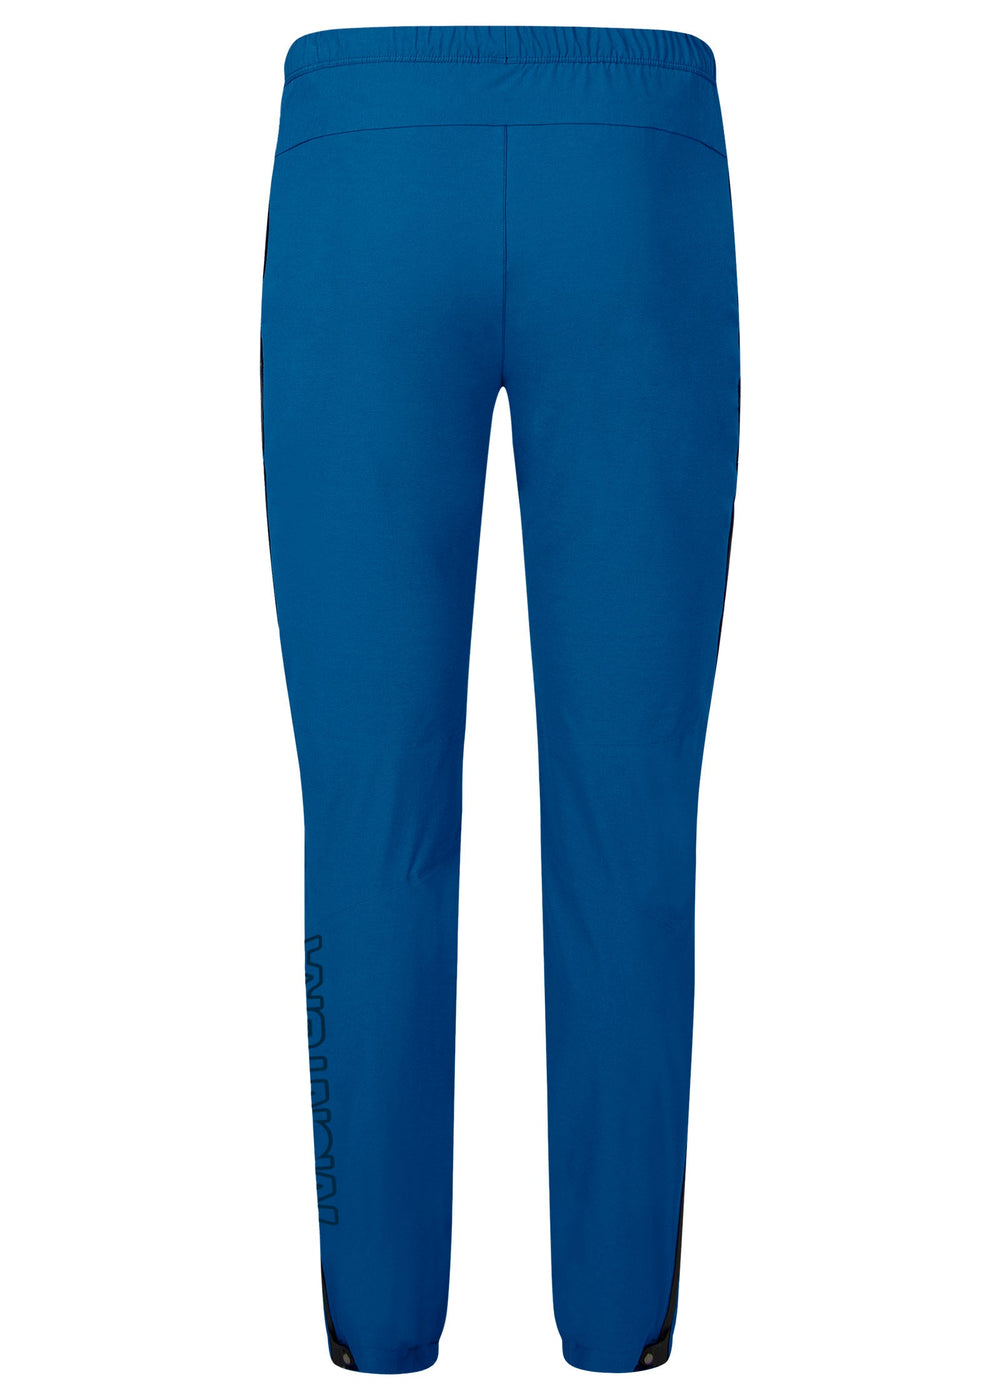 Speed Style Pants - Deep Blue/Mandarino (8766) - Blogside